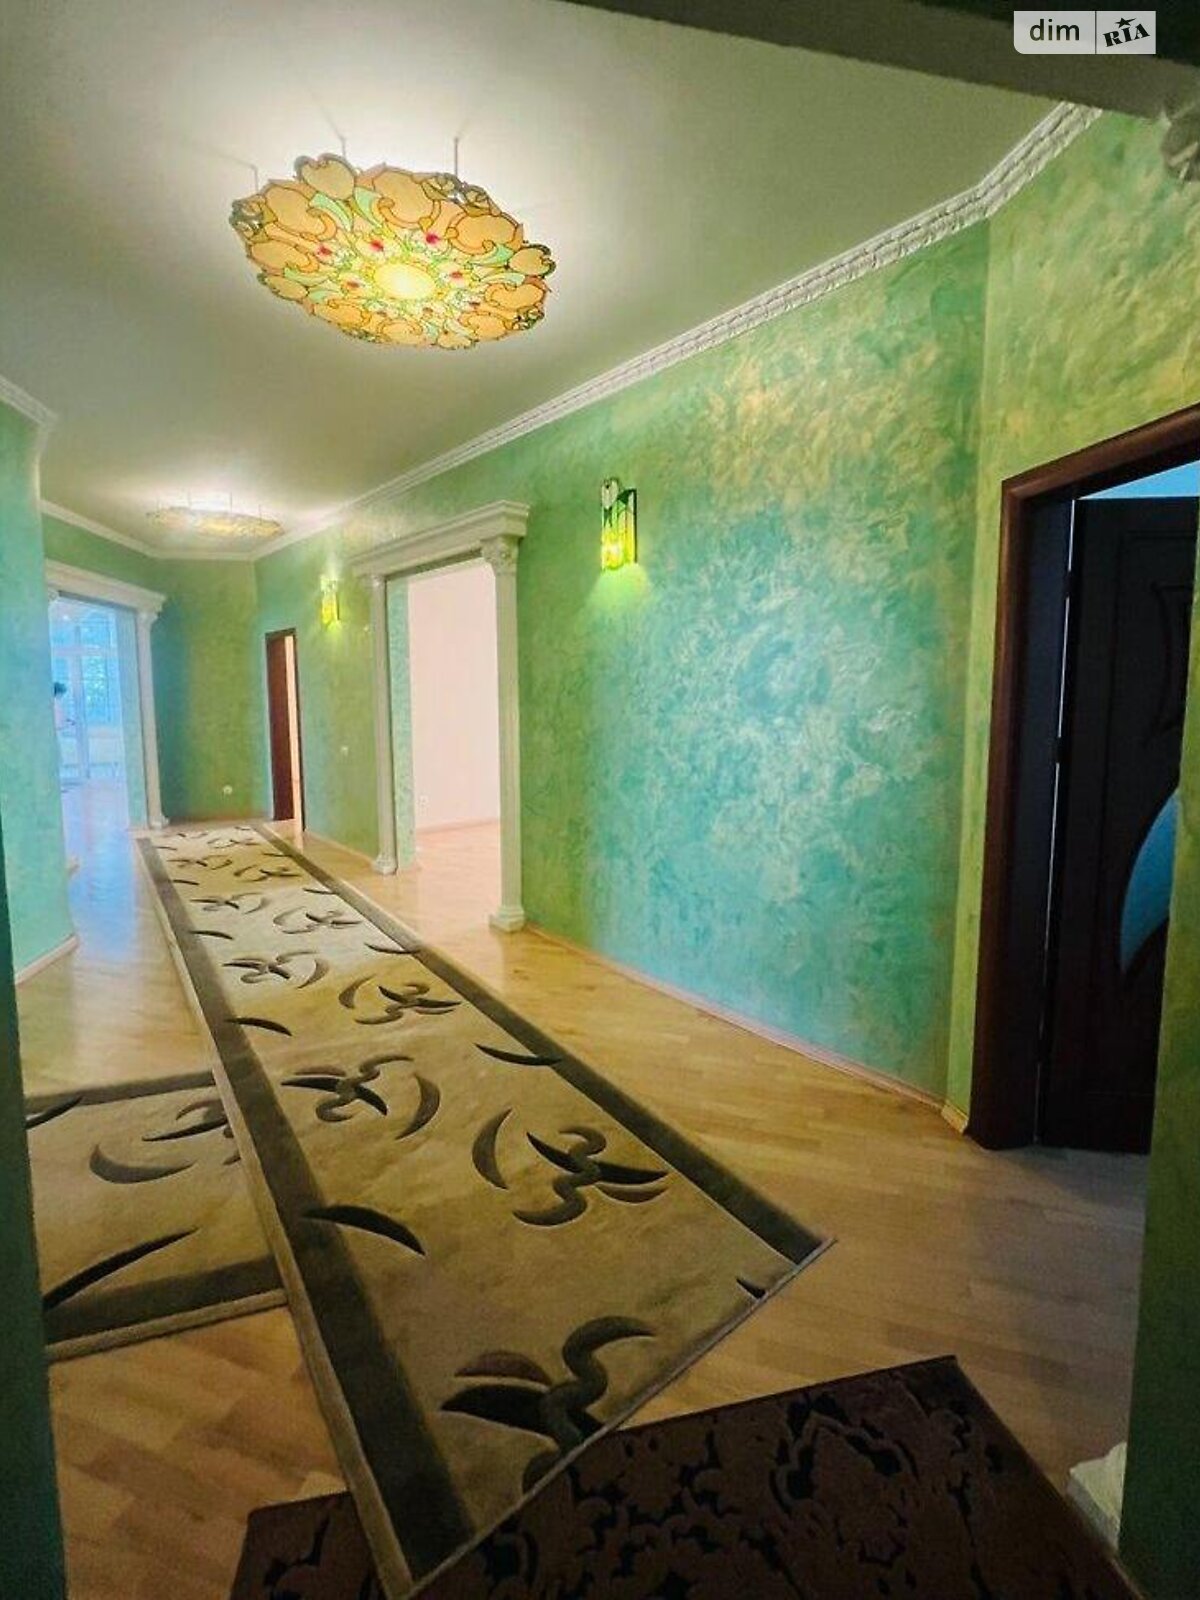 Продажа четырехкомнатной квартиры в Львове, на ул. Галилея 5, район Яловец фото 1